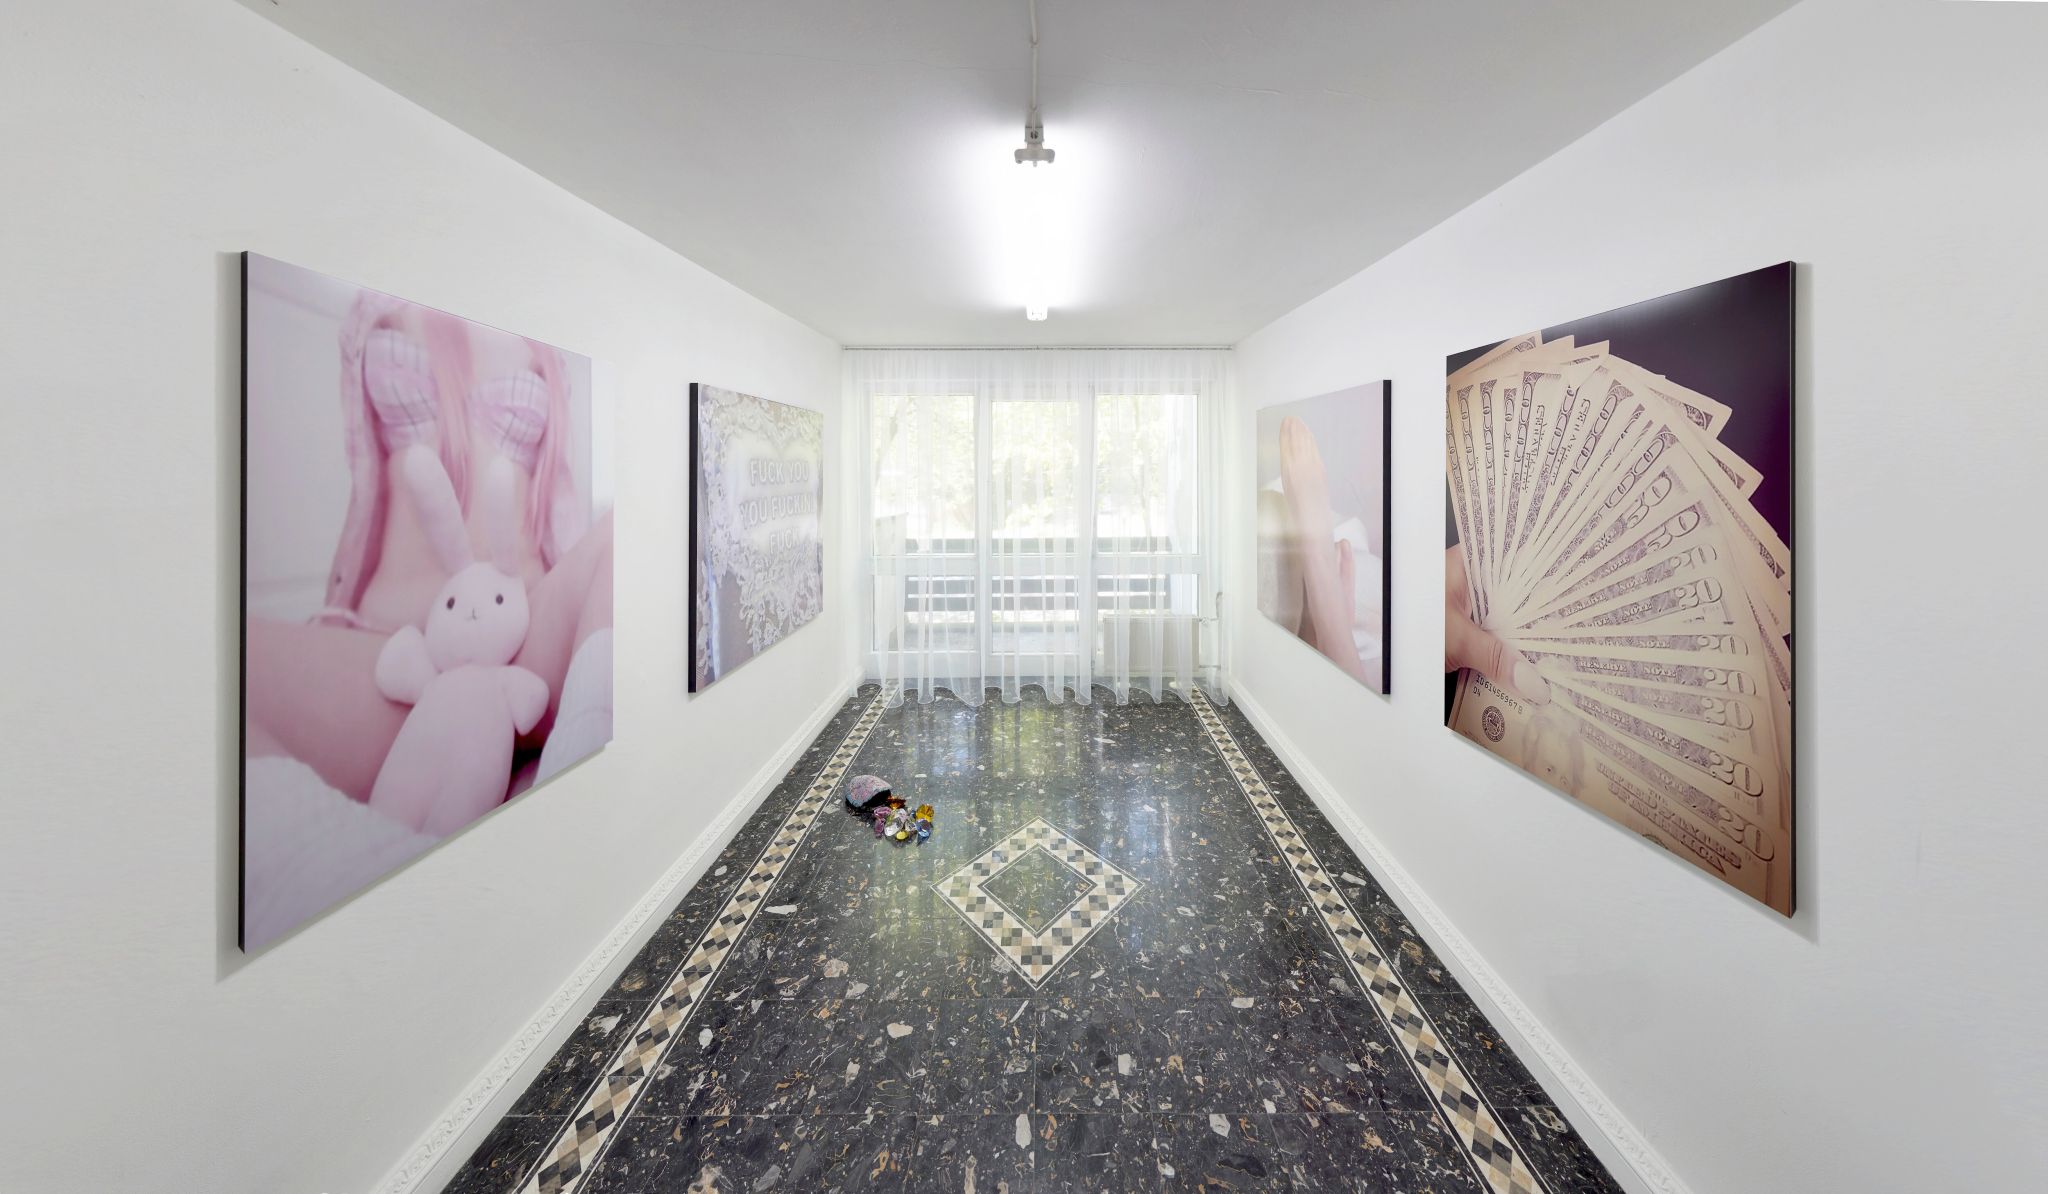 Amalia Ulman, Excellences & Perfections, 2015, Installation view